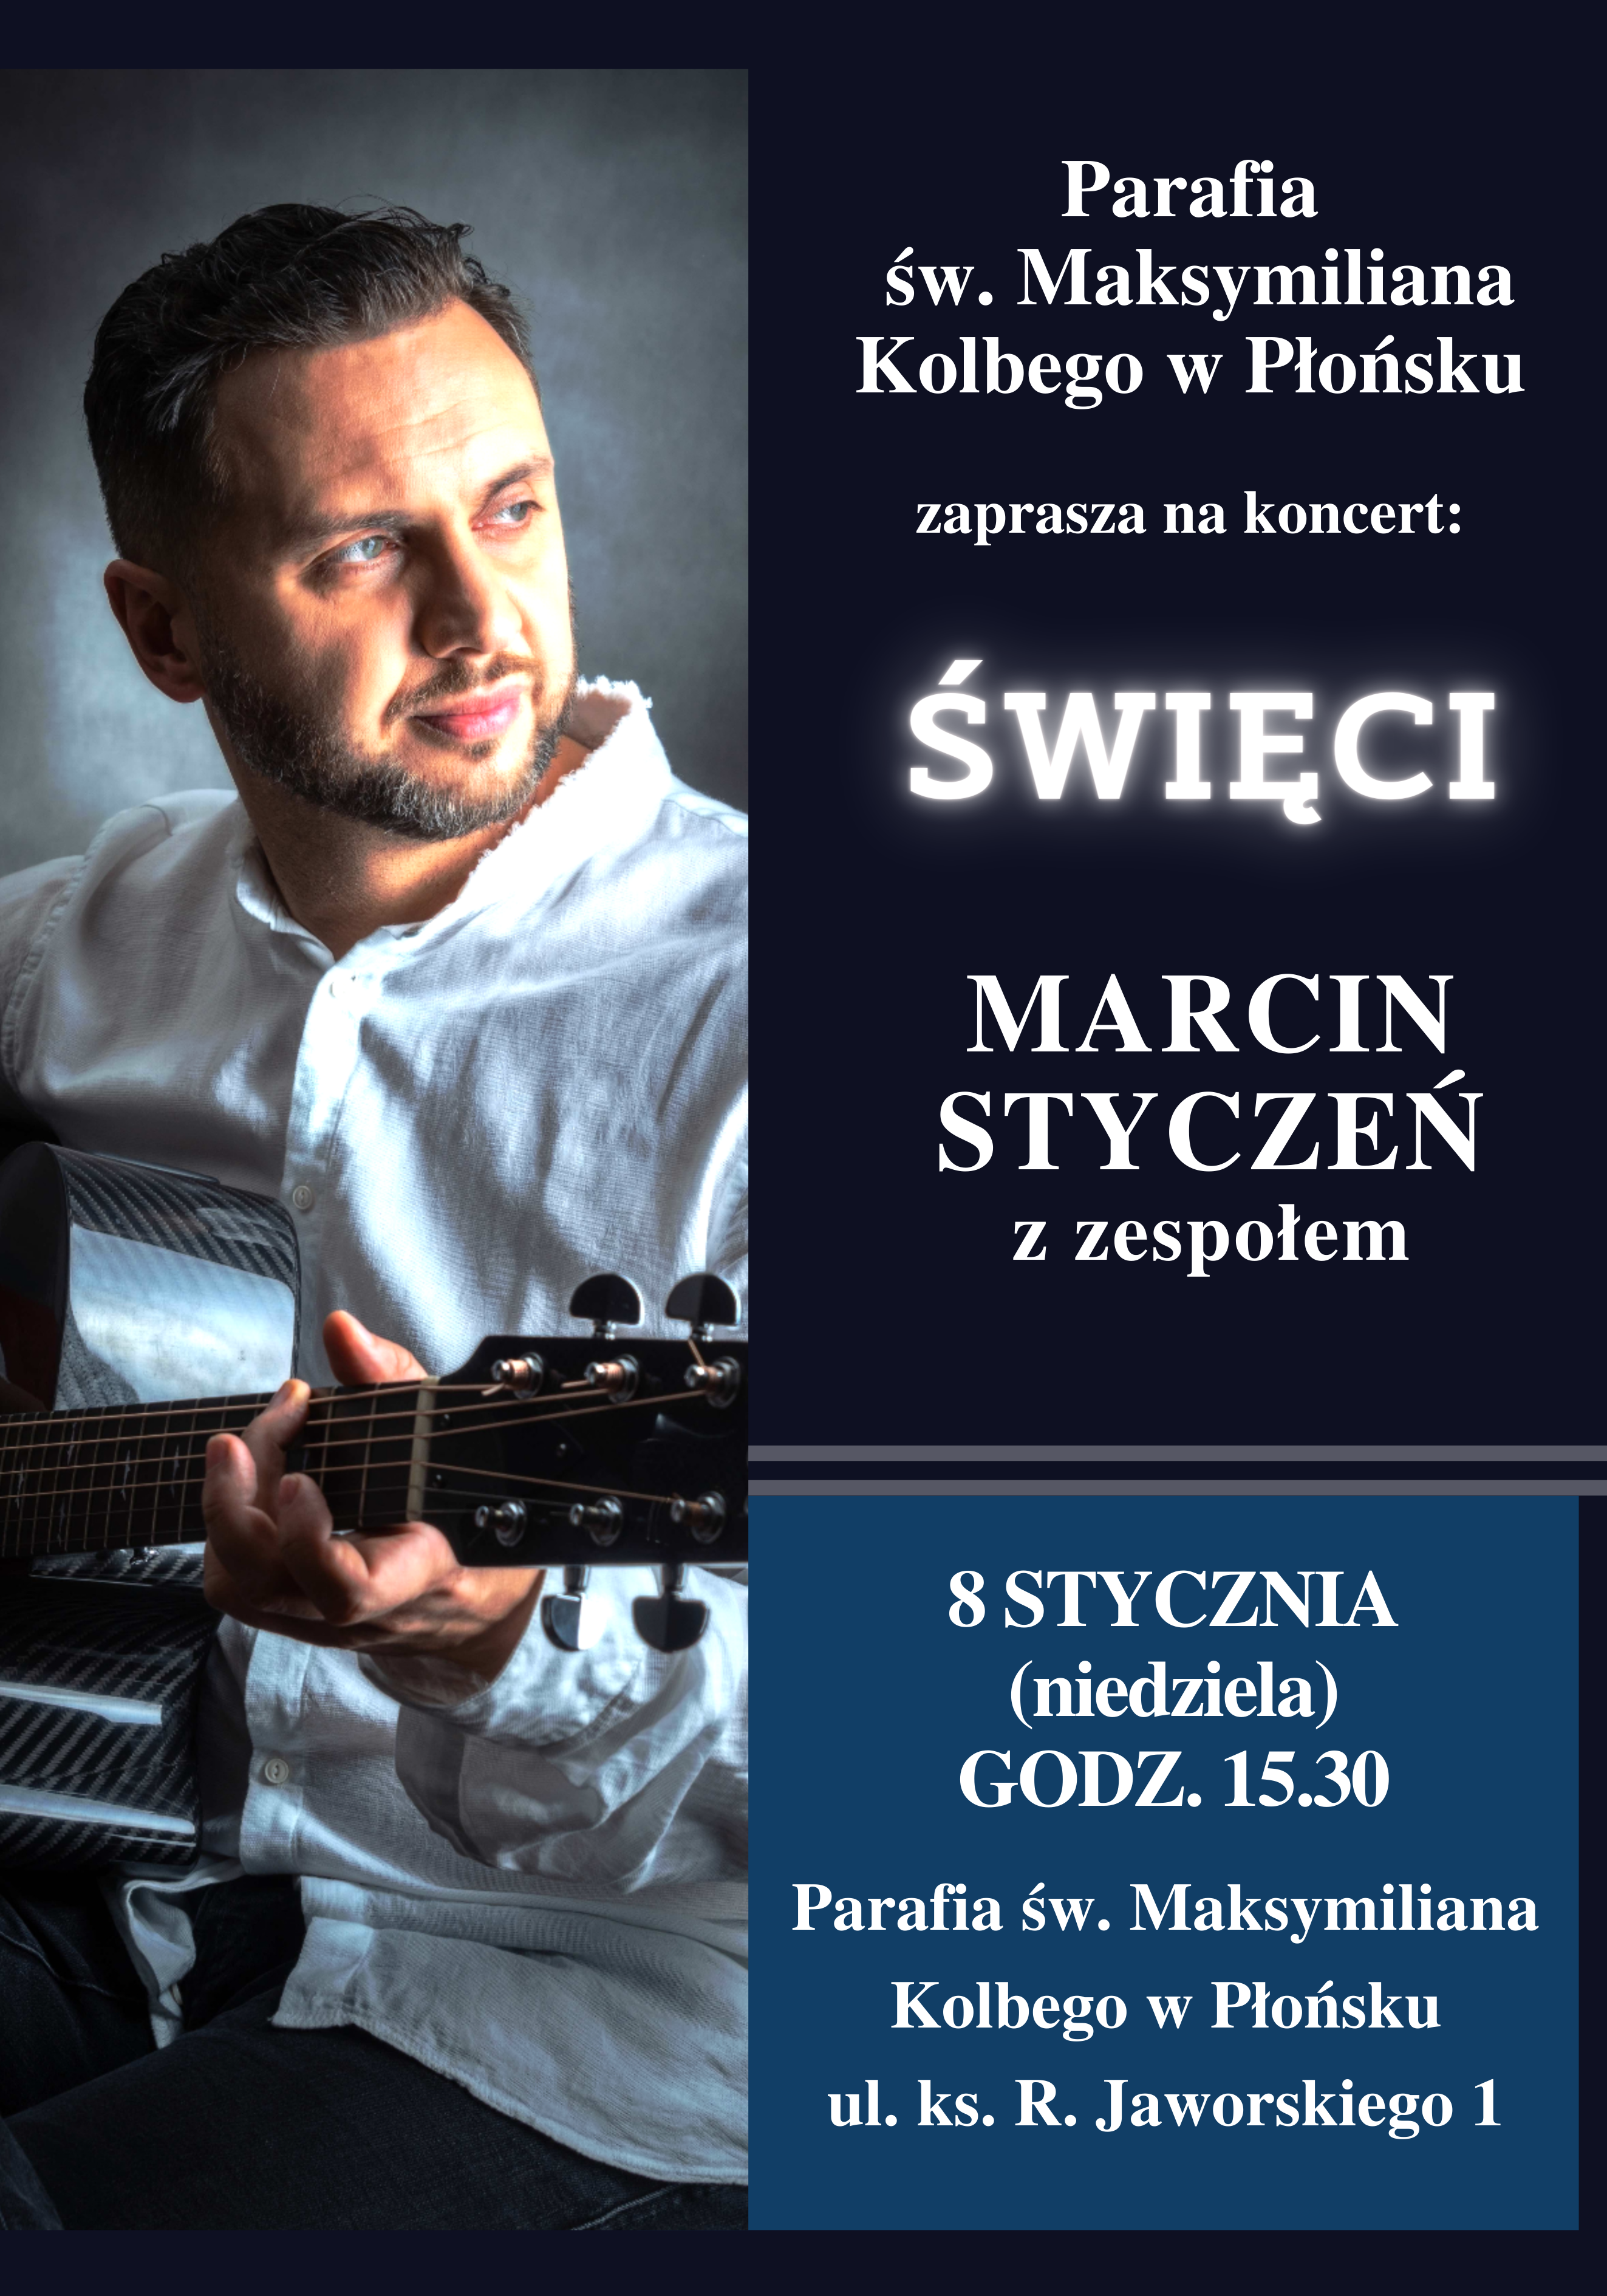 Koncert Marcina Stycznia